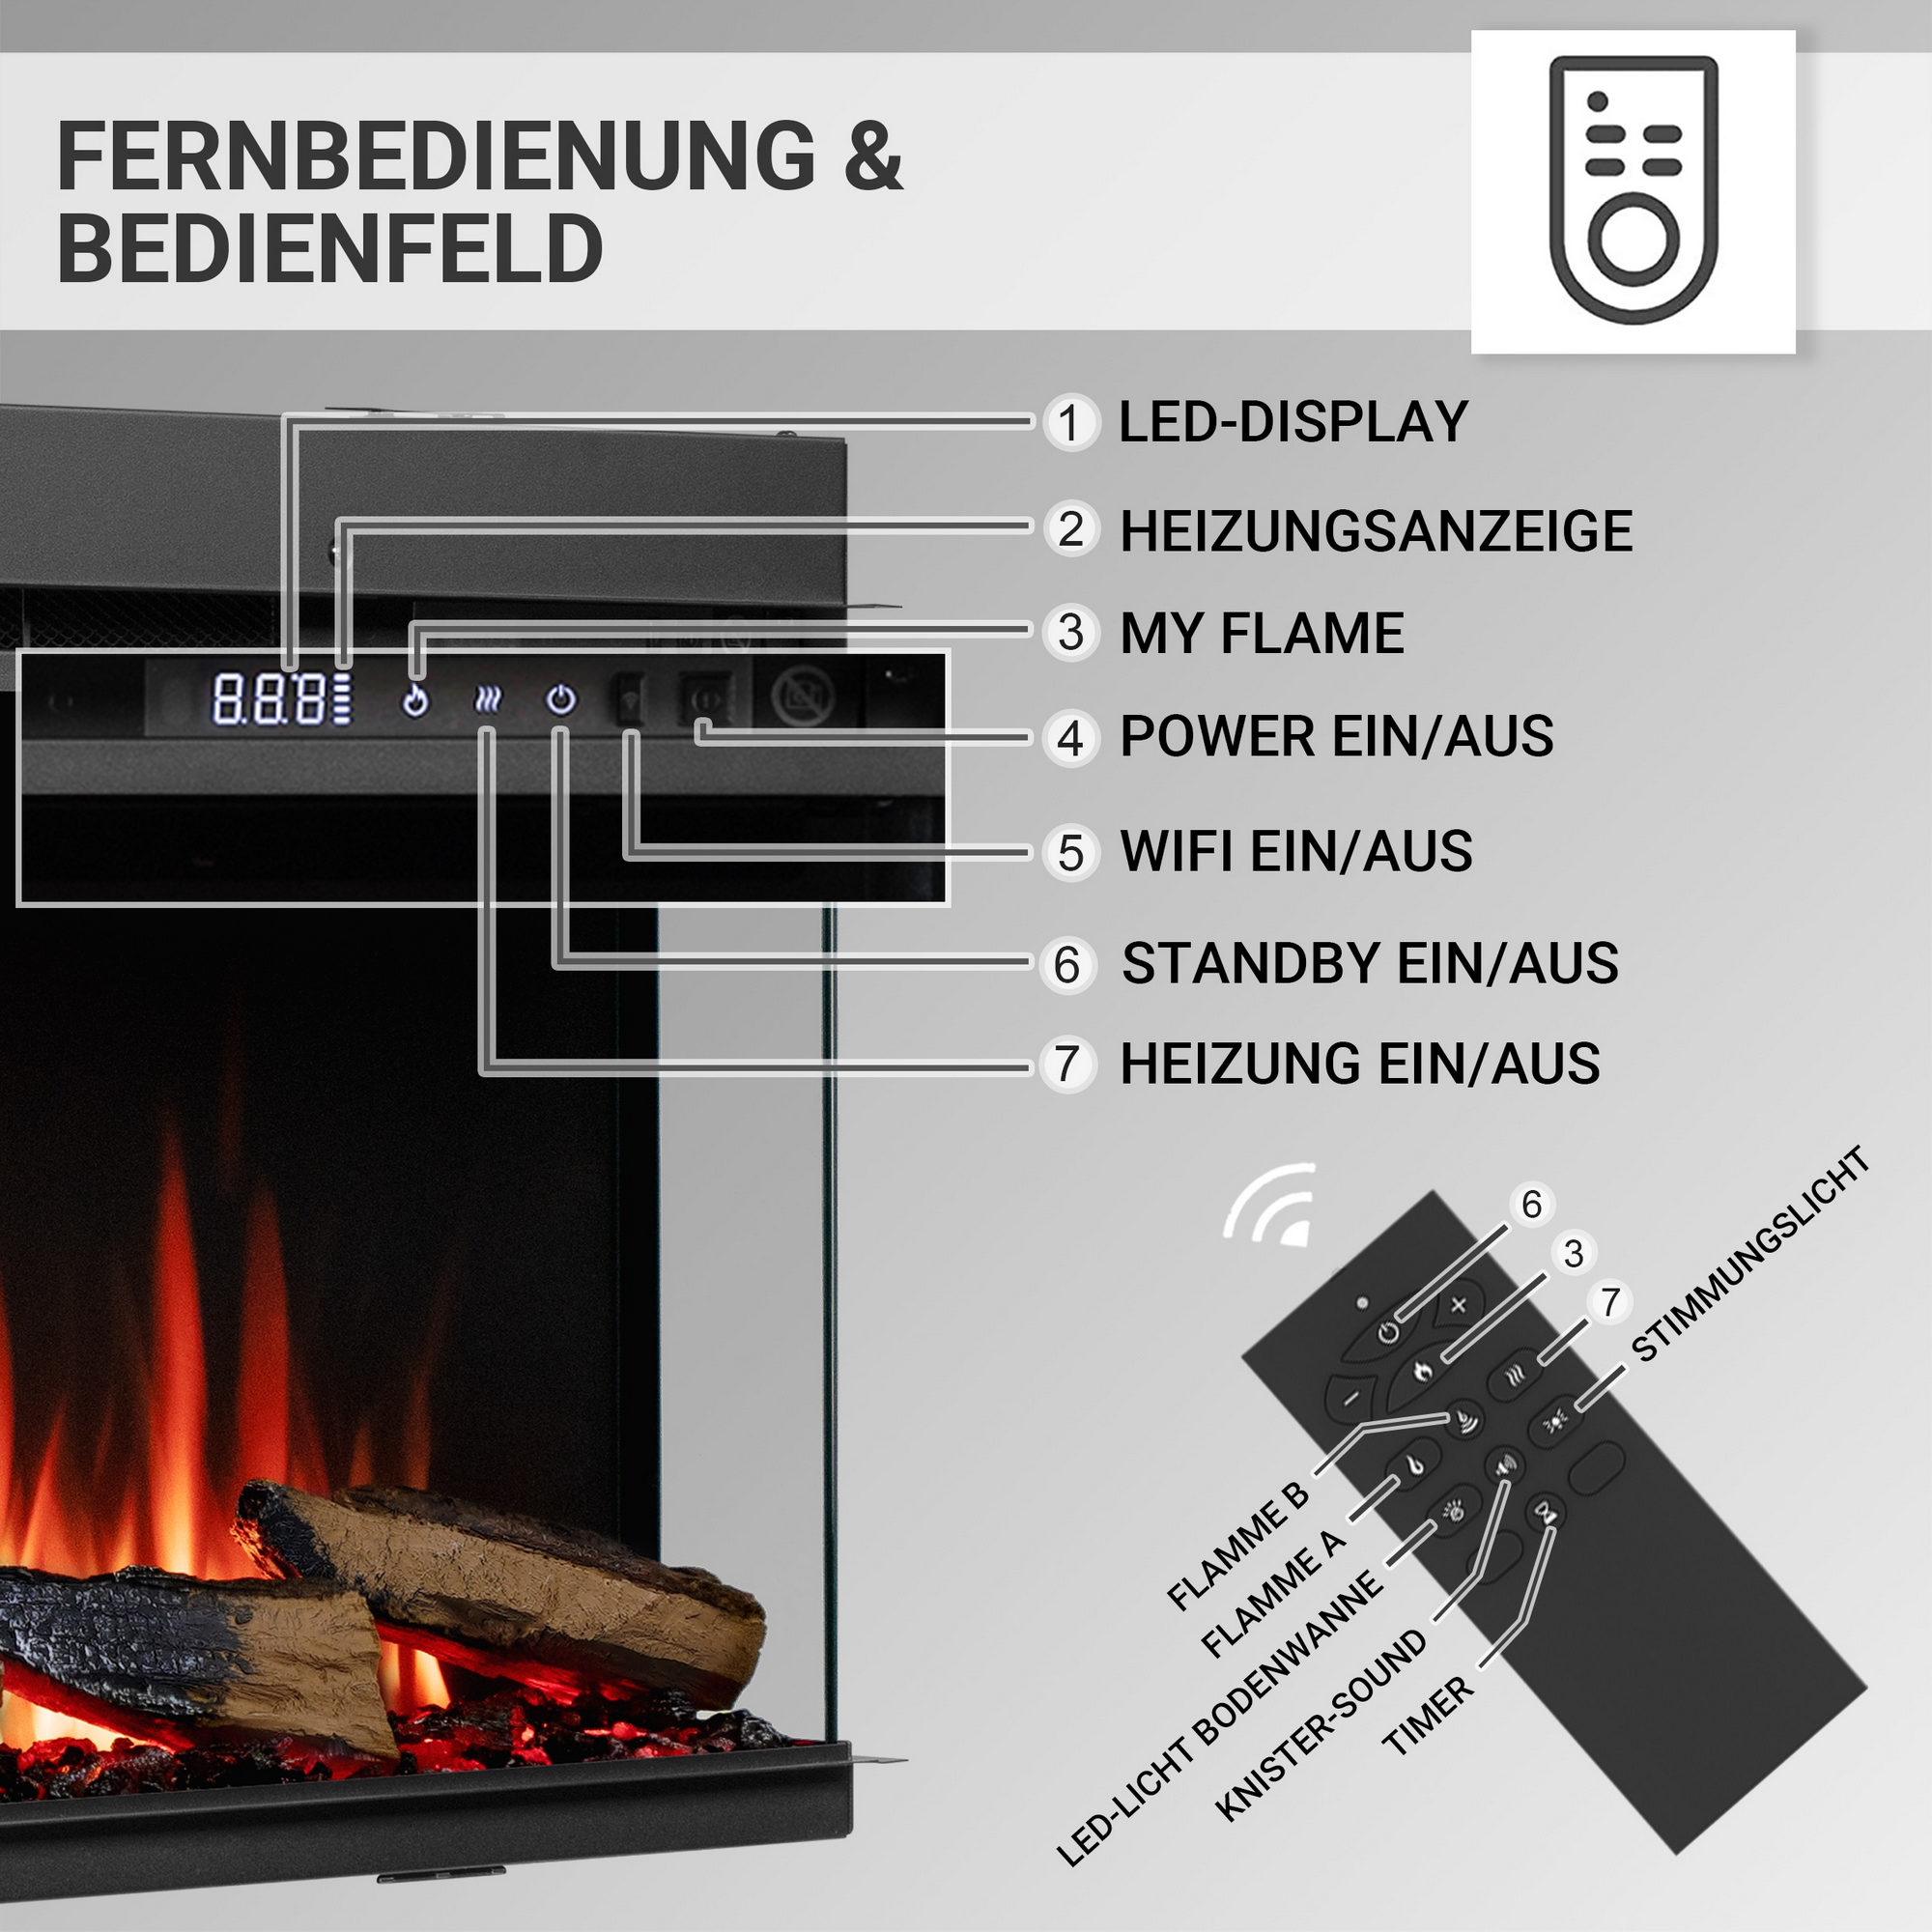 Elektro-Einbaukamin 'Athena 44' schwarz 1500 W, Wifi 3D-Flammeneffekt Fernbedienung 112,8 x 49,5 x 21 cm + product picture